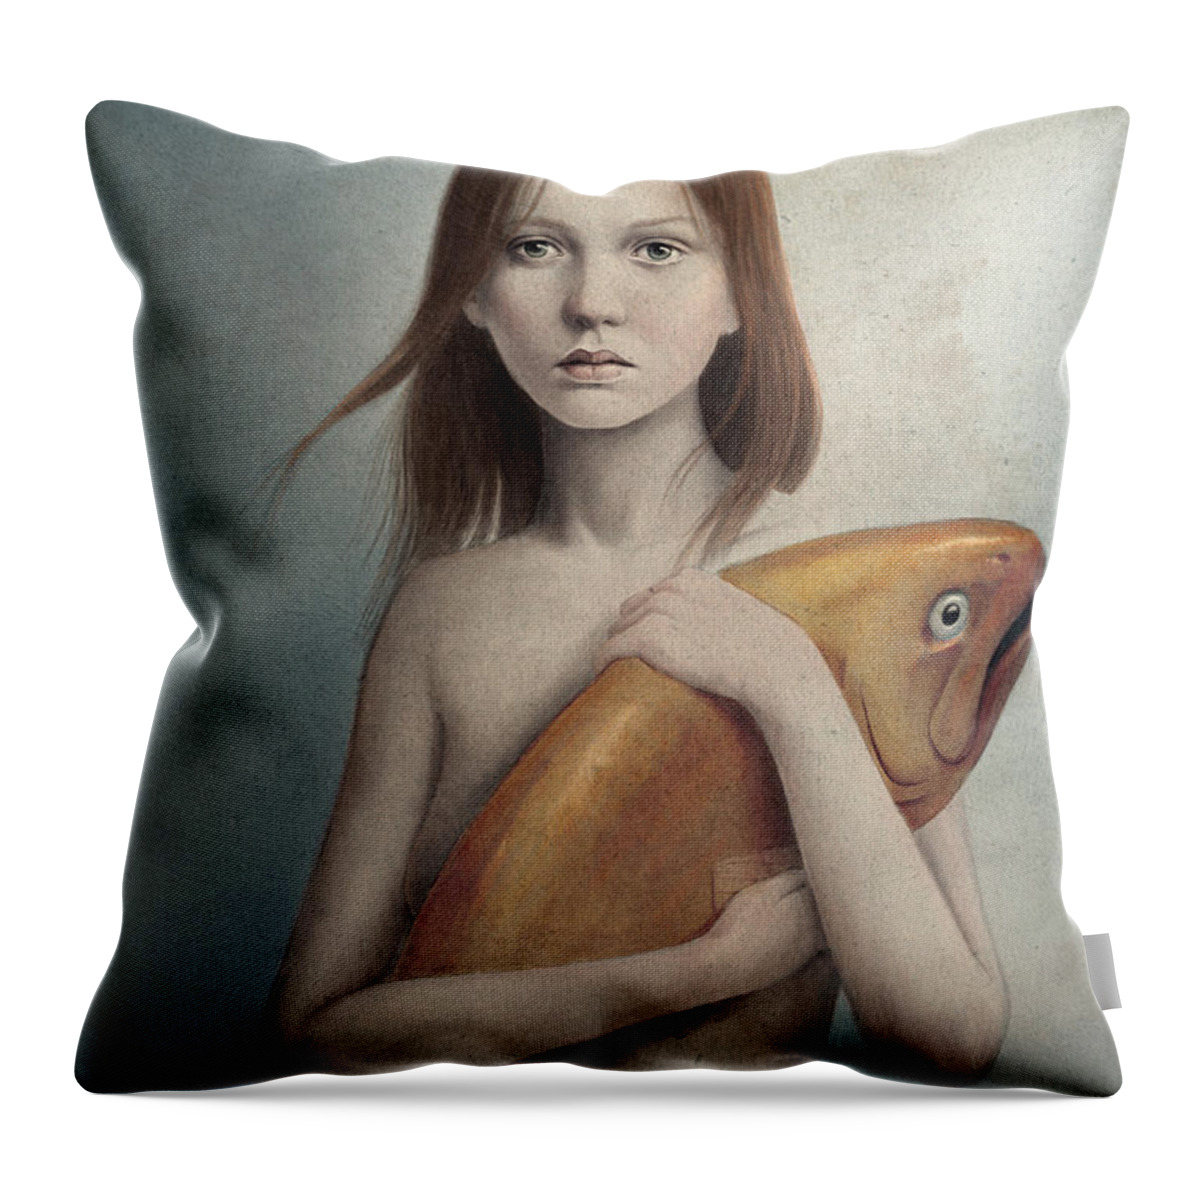 Woman Throw Pillow featuring the digital art Pet by Diego Fernandez